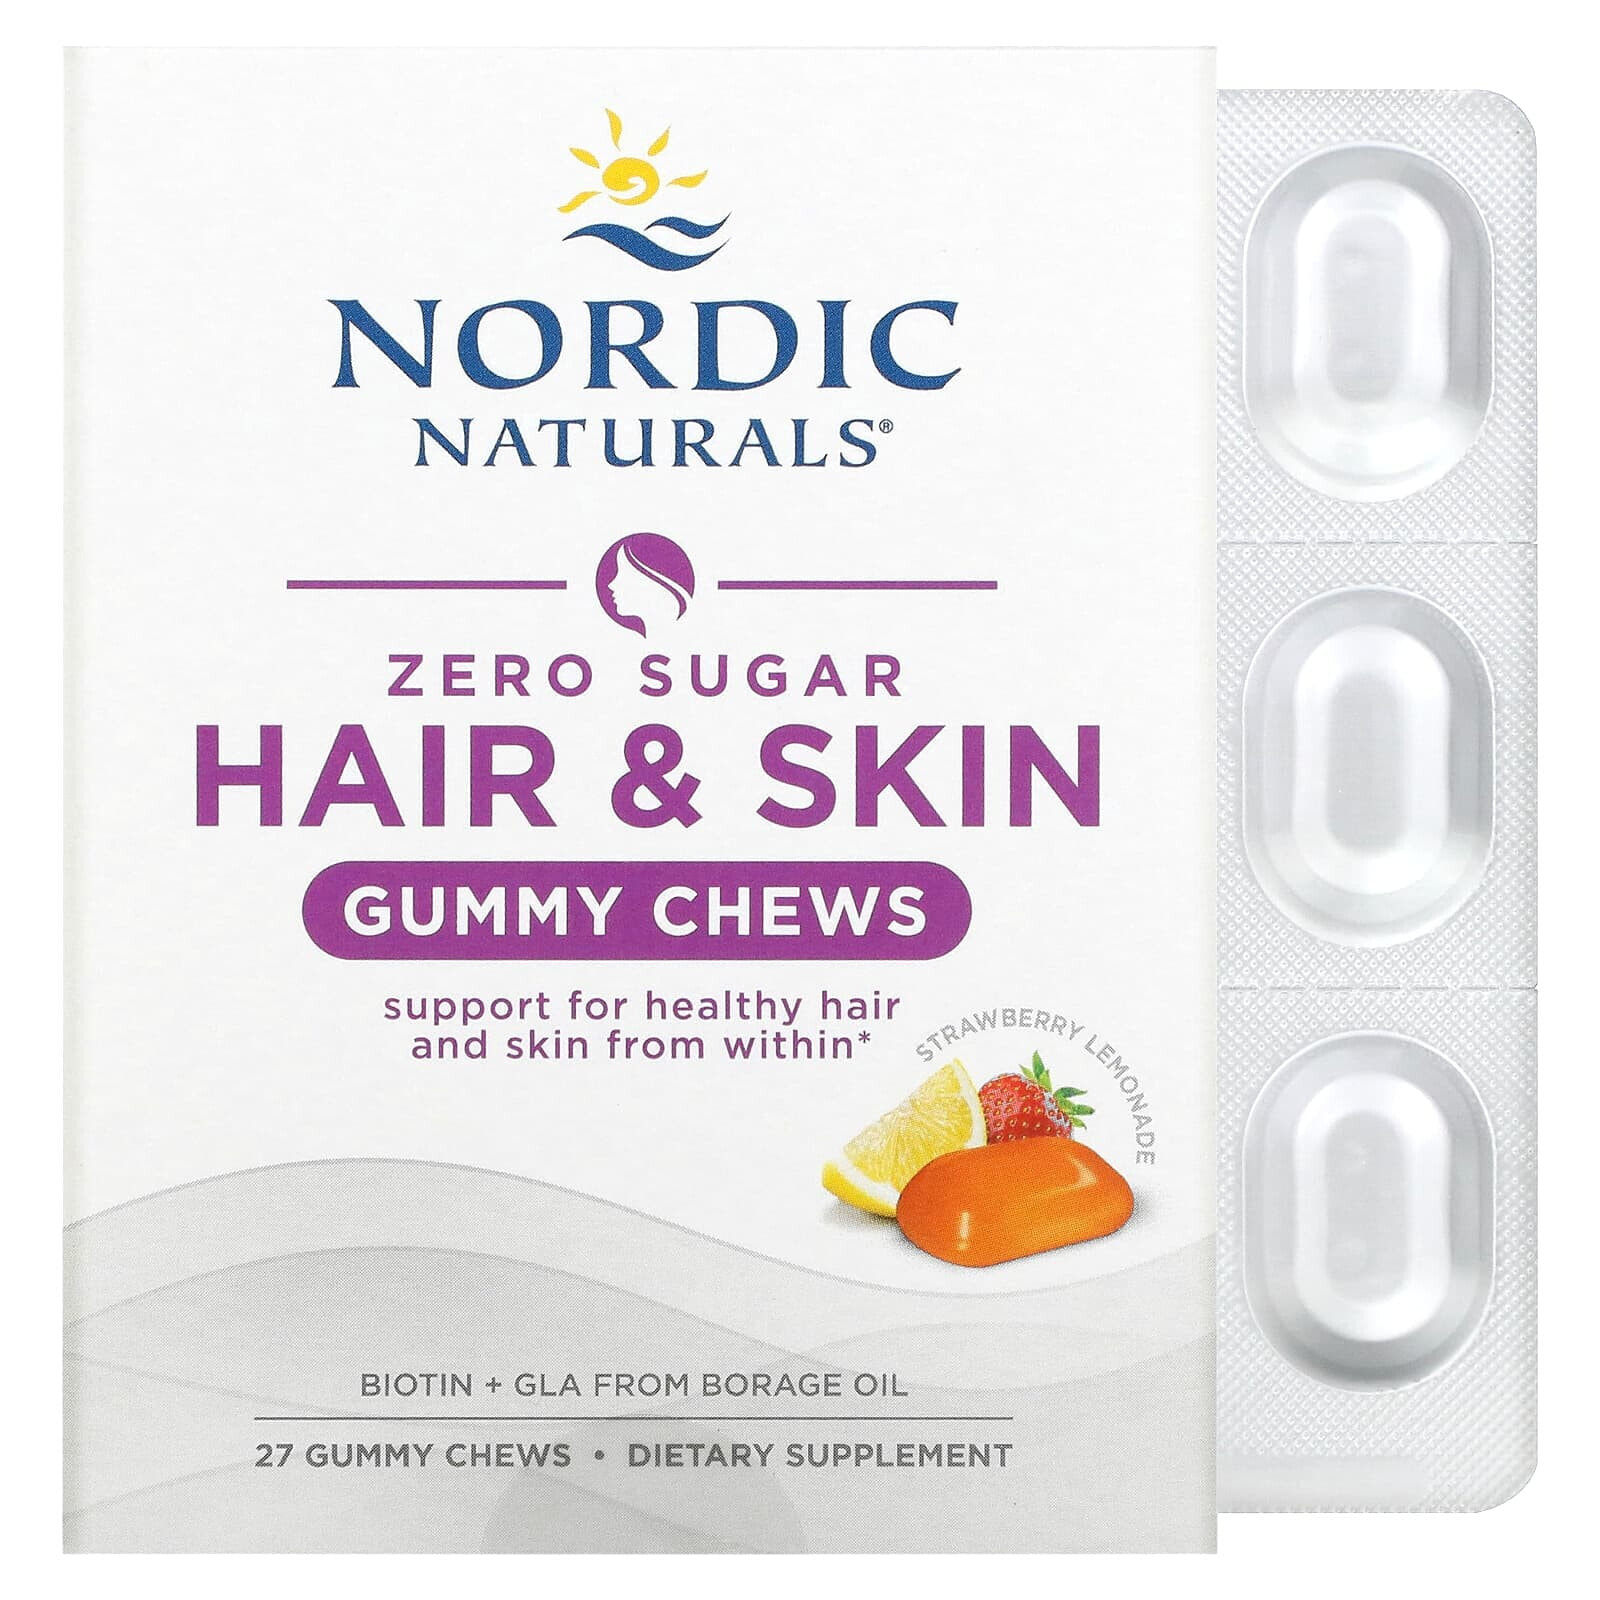 Нордик Натуралс, Zero Sugar Hair & Skin Gummy Chews, Strawberry Lemonade, 27 Gummy Chews